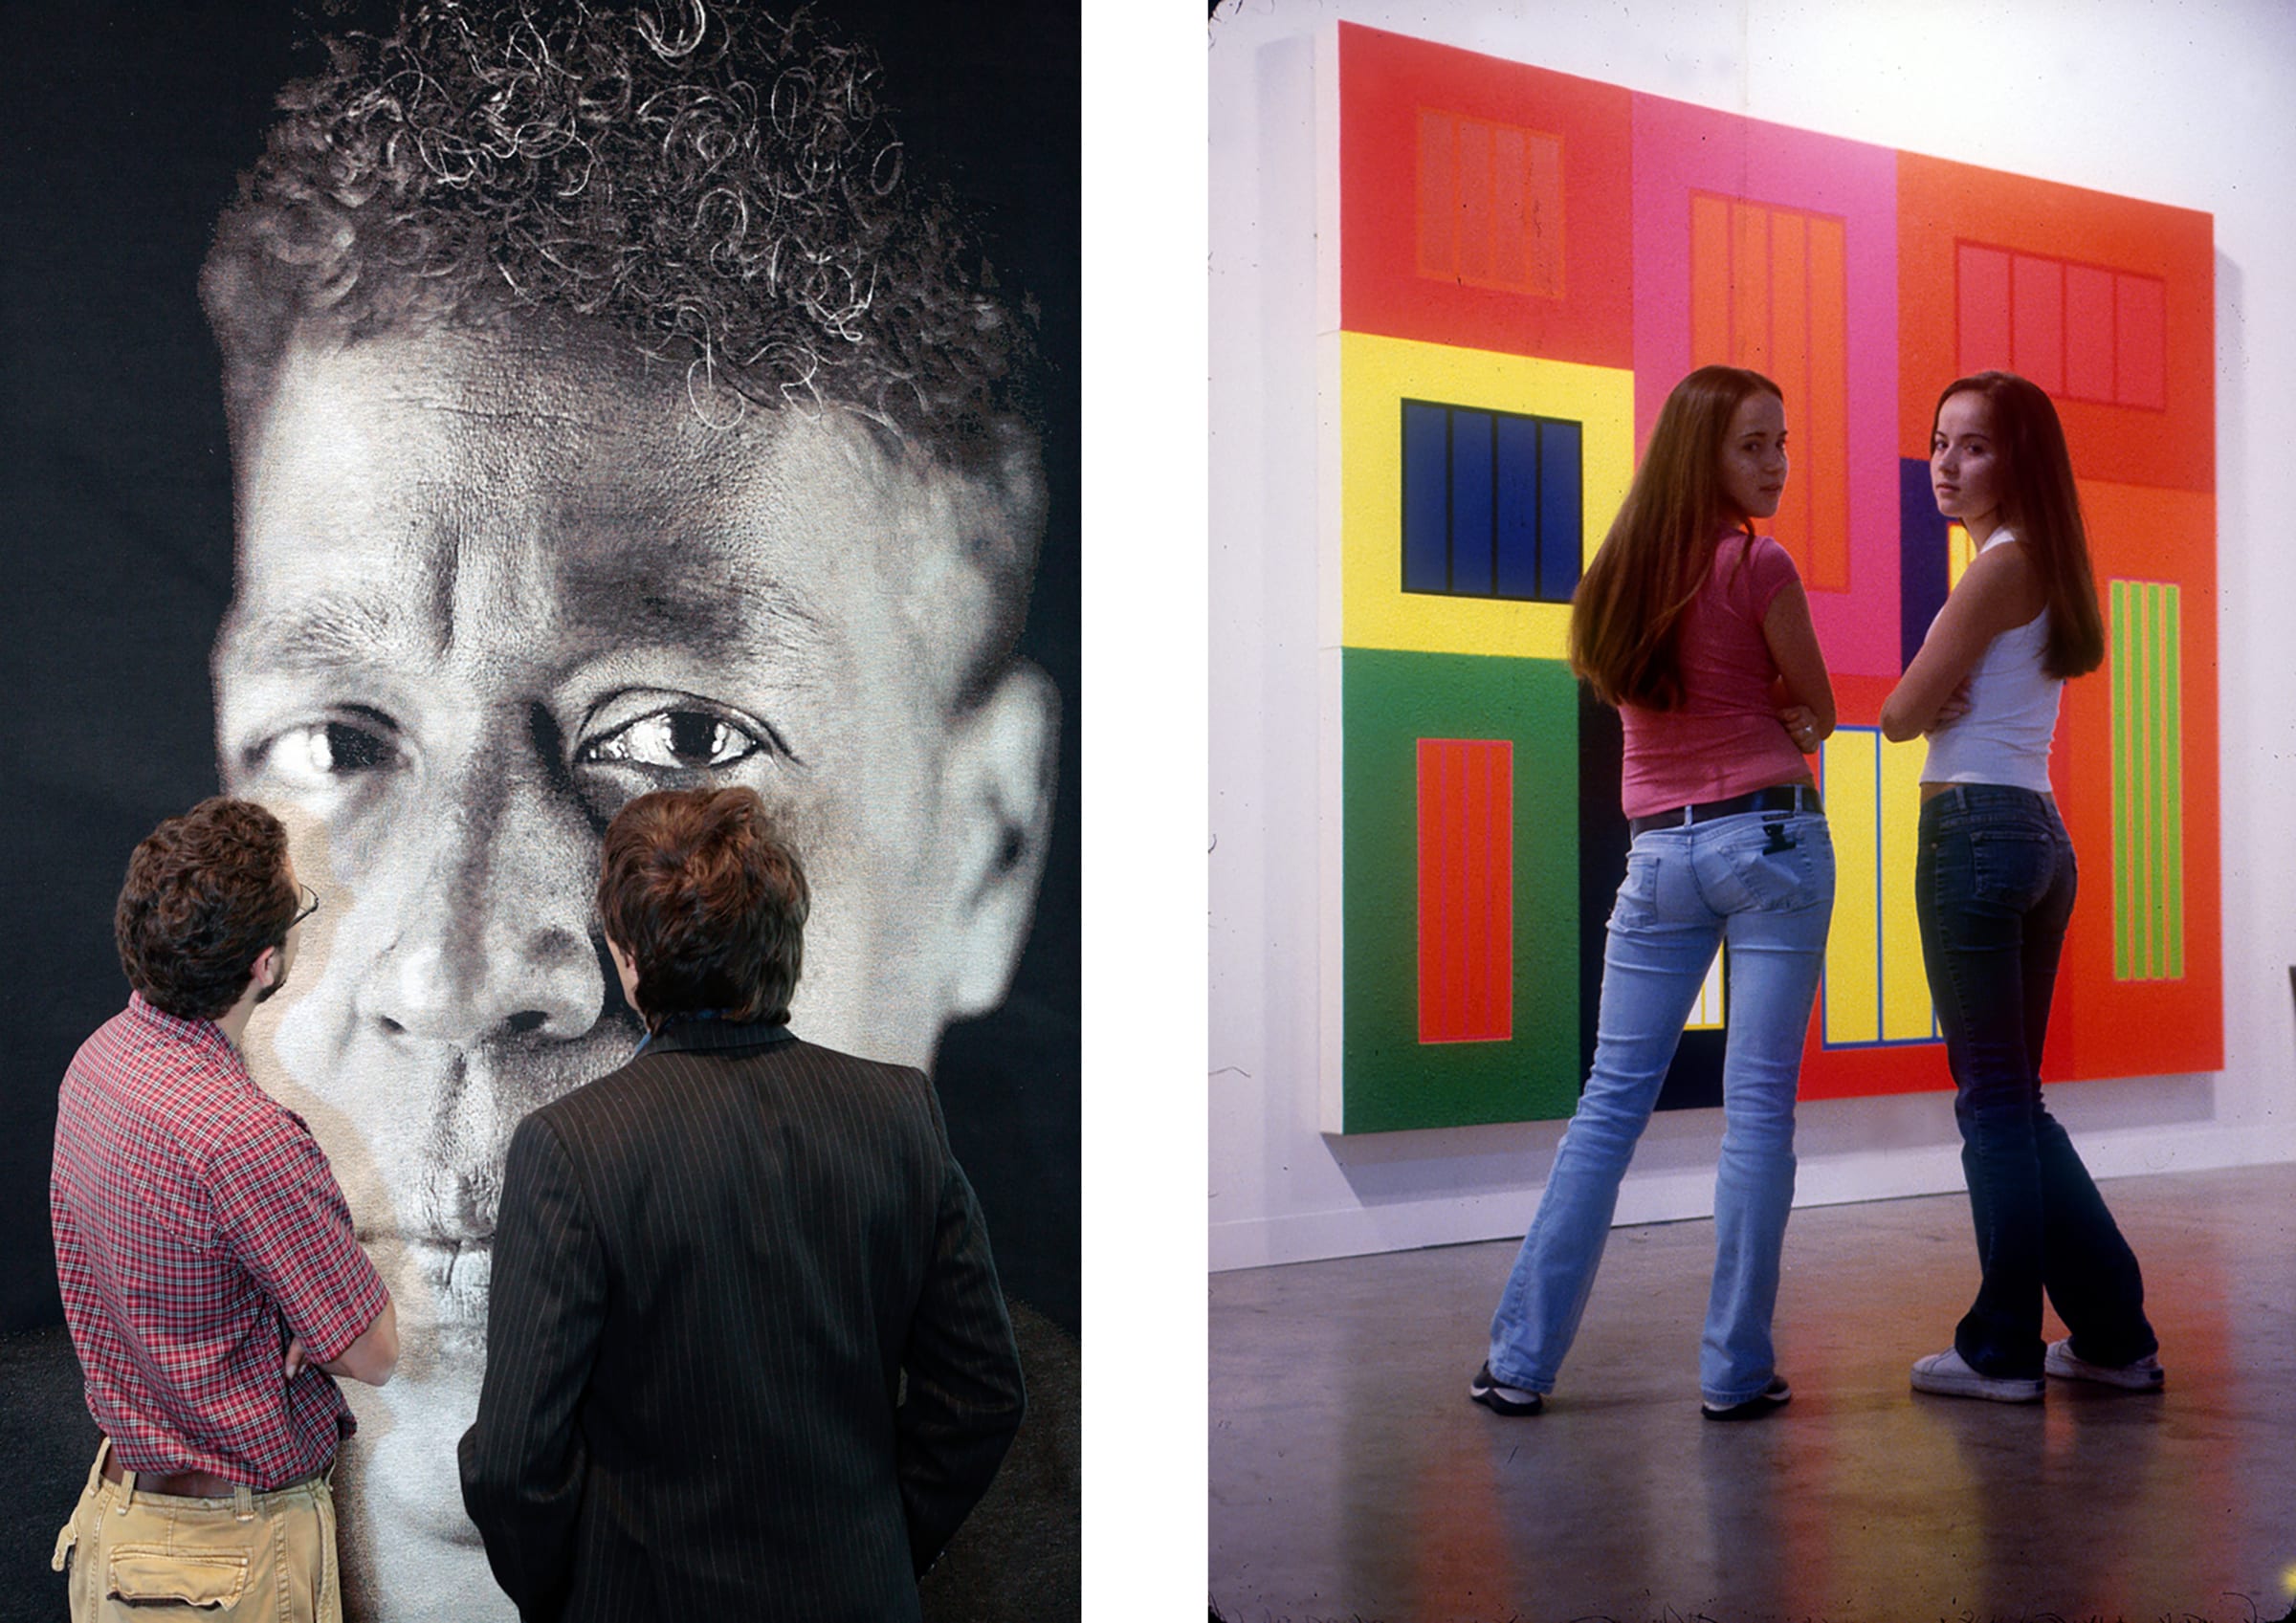 Left: White Cube's presentation at Art Basel Miami Beach, 2007. Right: Impression from Art Basel Miami Beach, 2002.